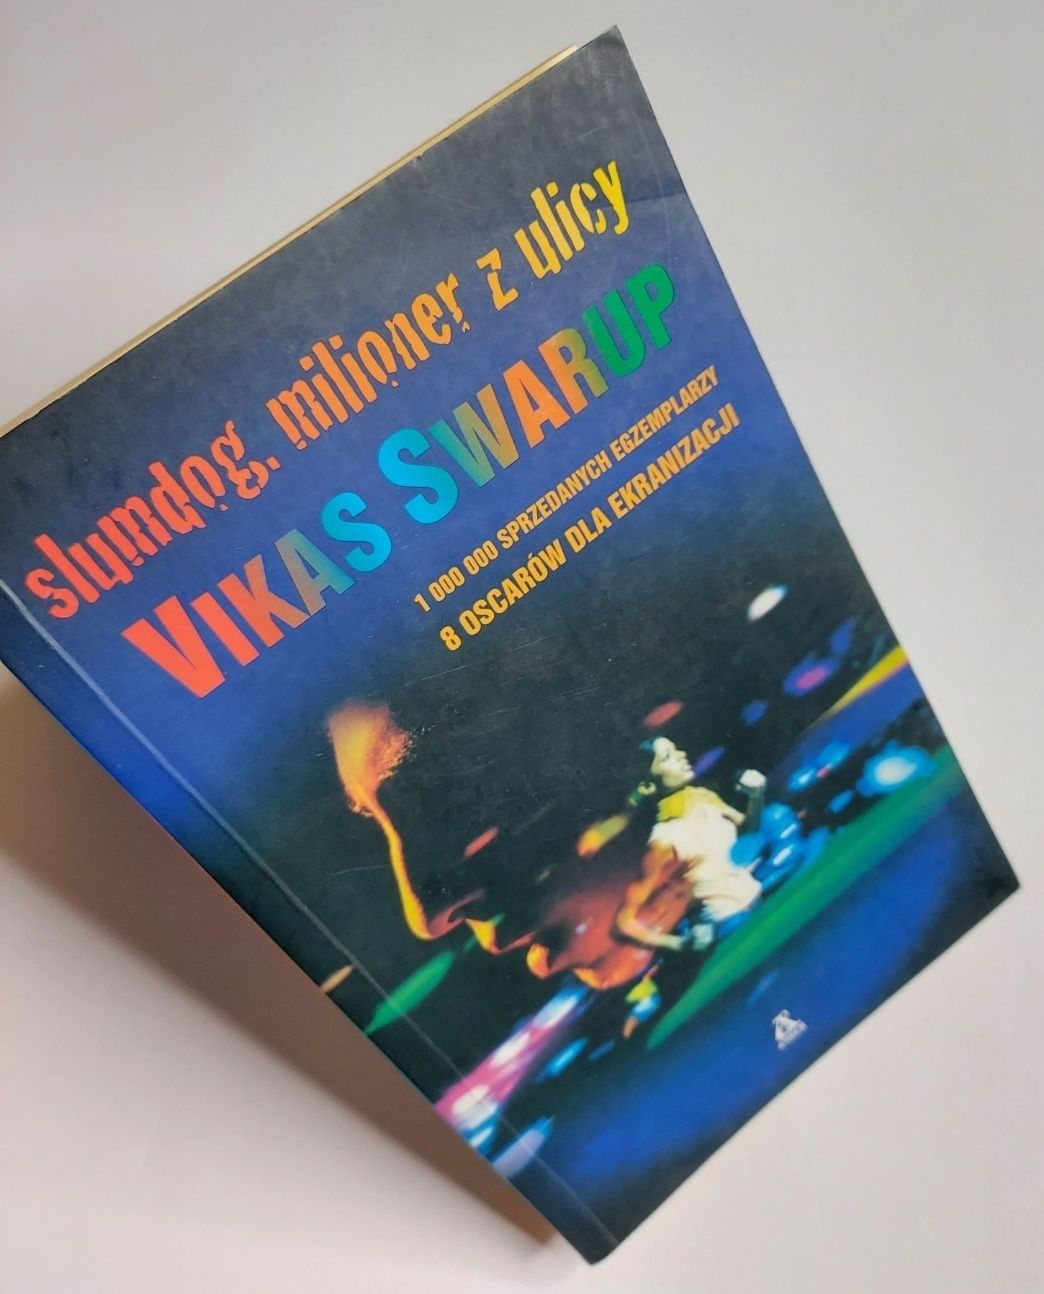 Slumdog, milioner z ulicy - Vikas Swarup